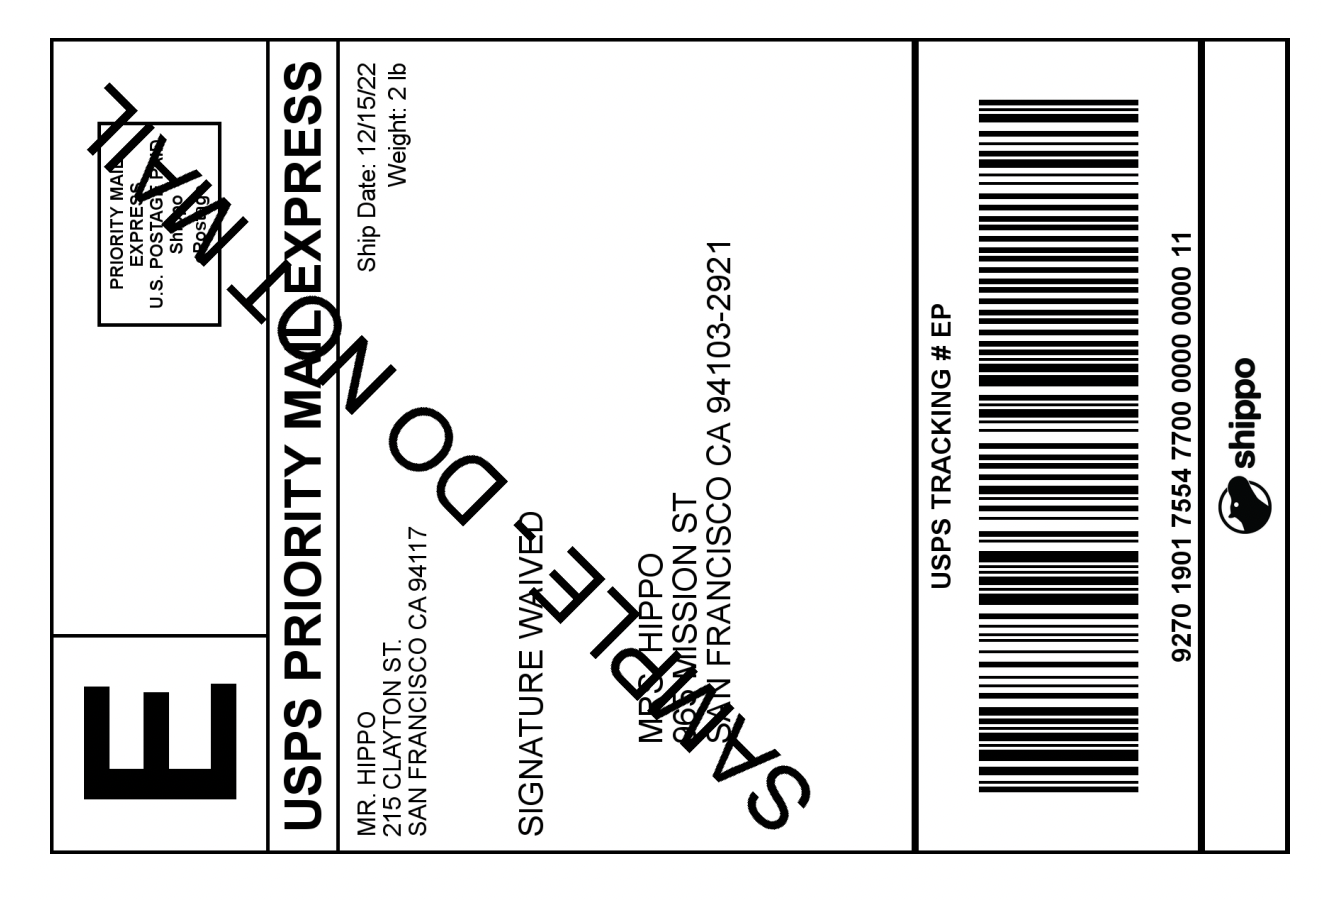 Sample shipping label